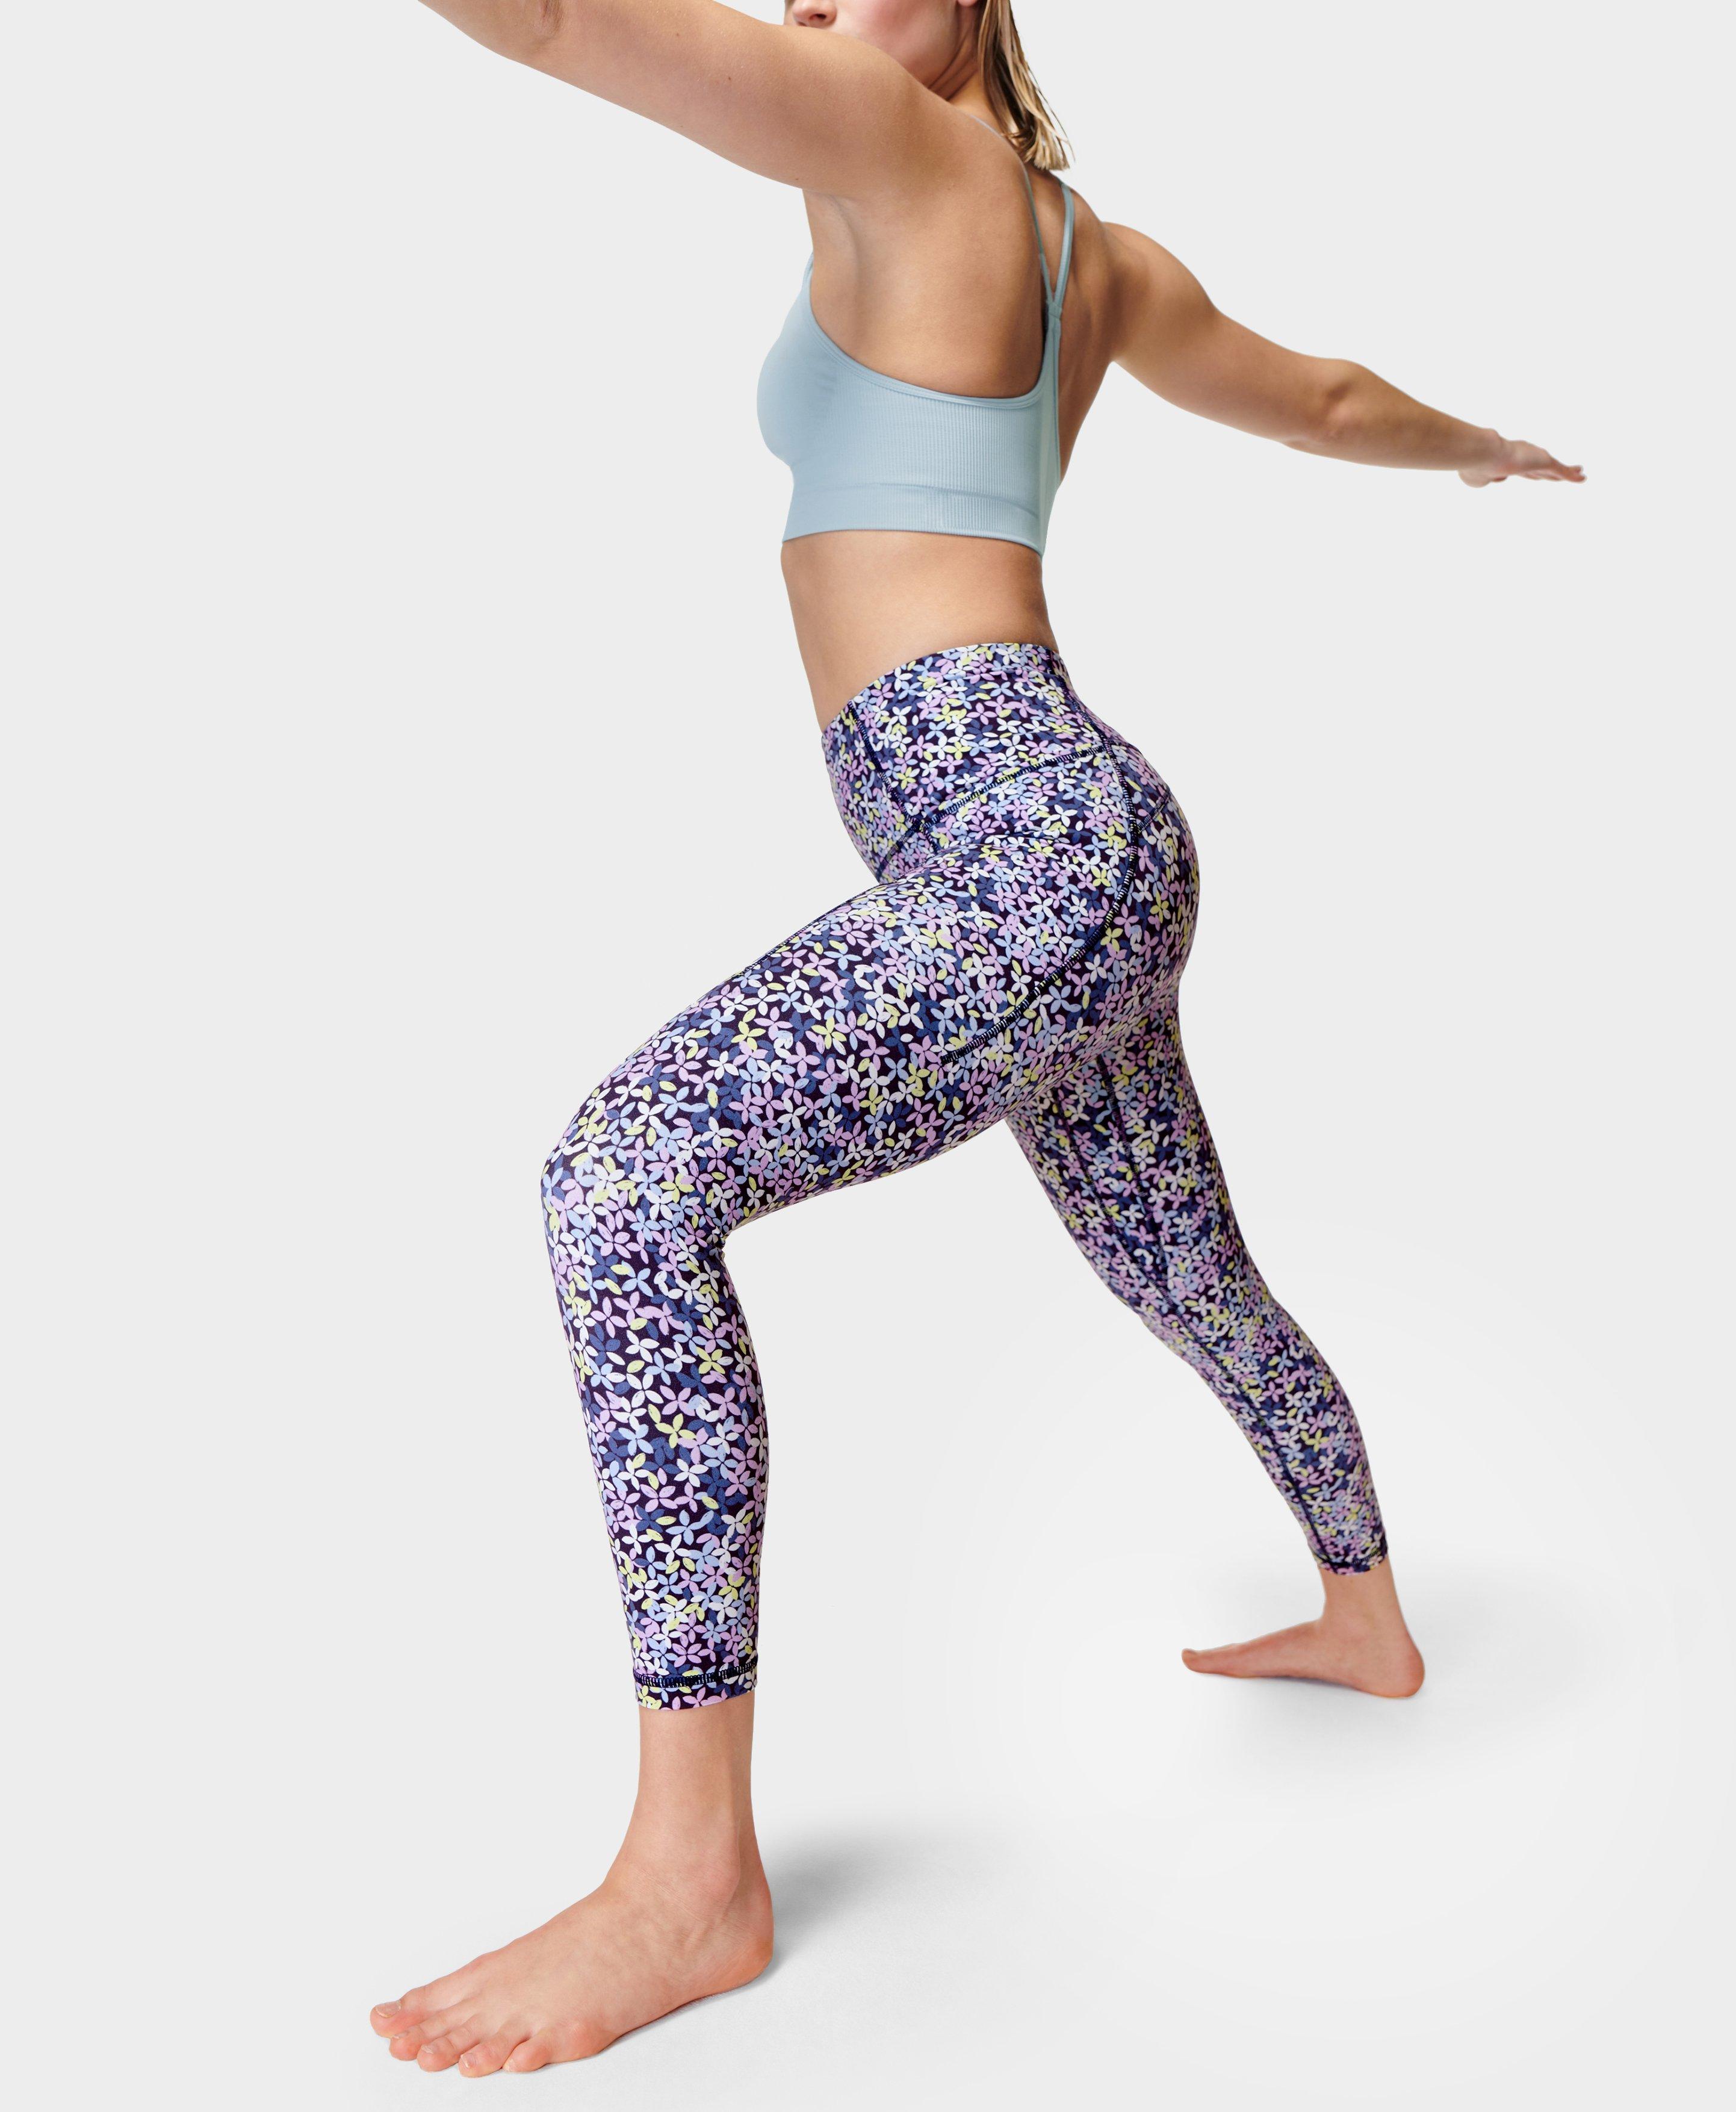 Super Soft 7/8 Yoga Leggings - Purple Floral Shadow Print, Women's Leggings